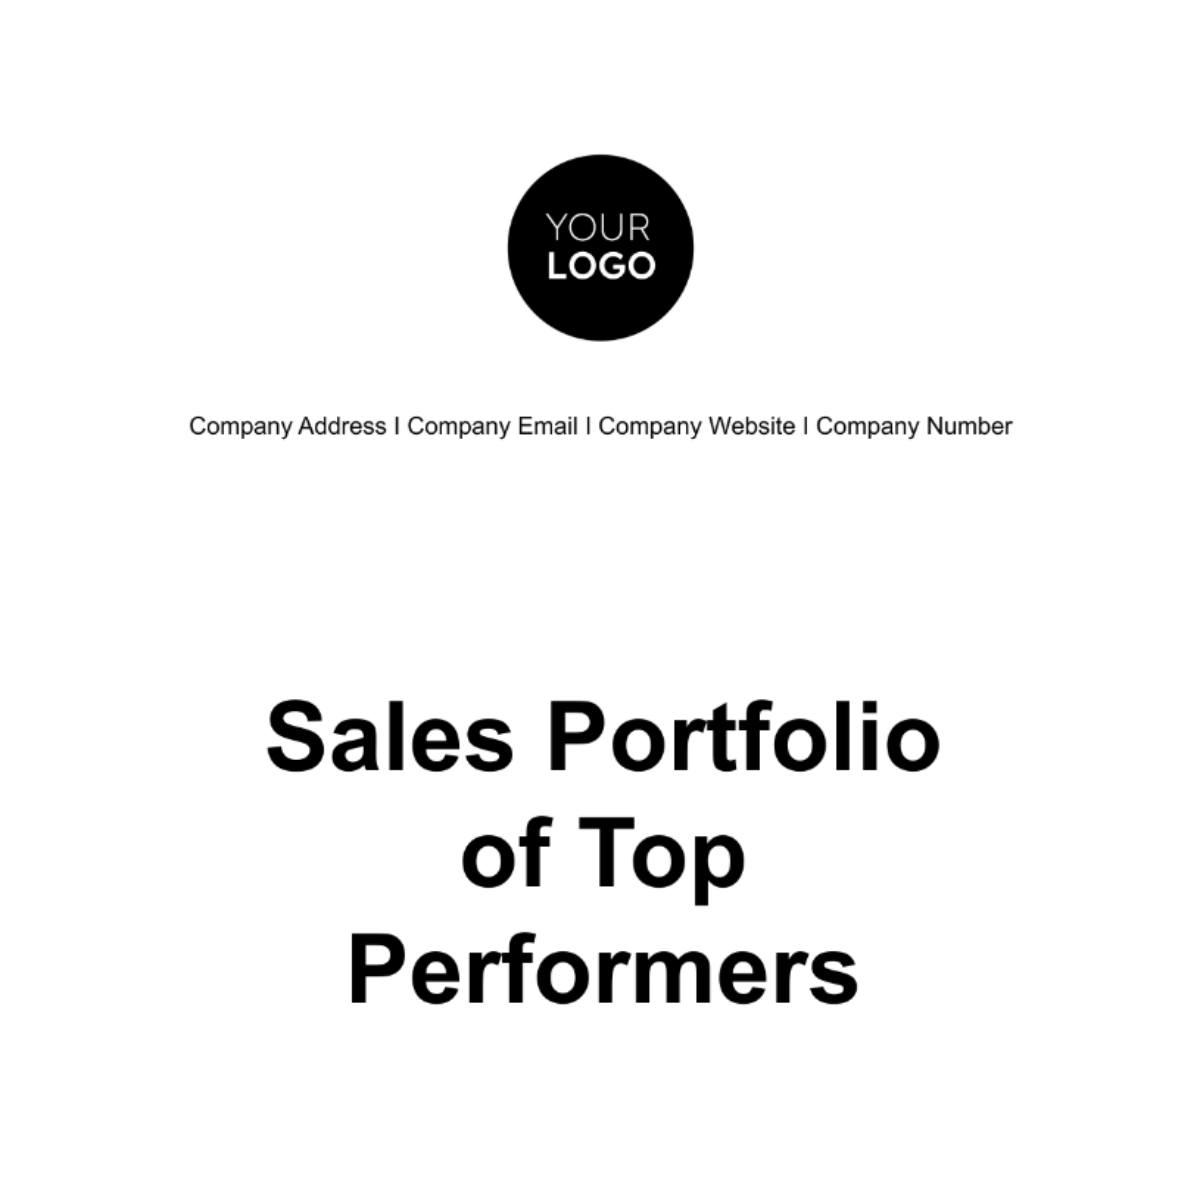 Sales Portfolio of Top Performers Template